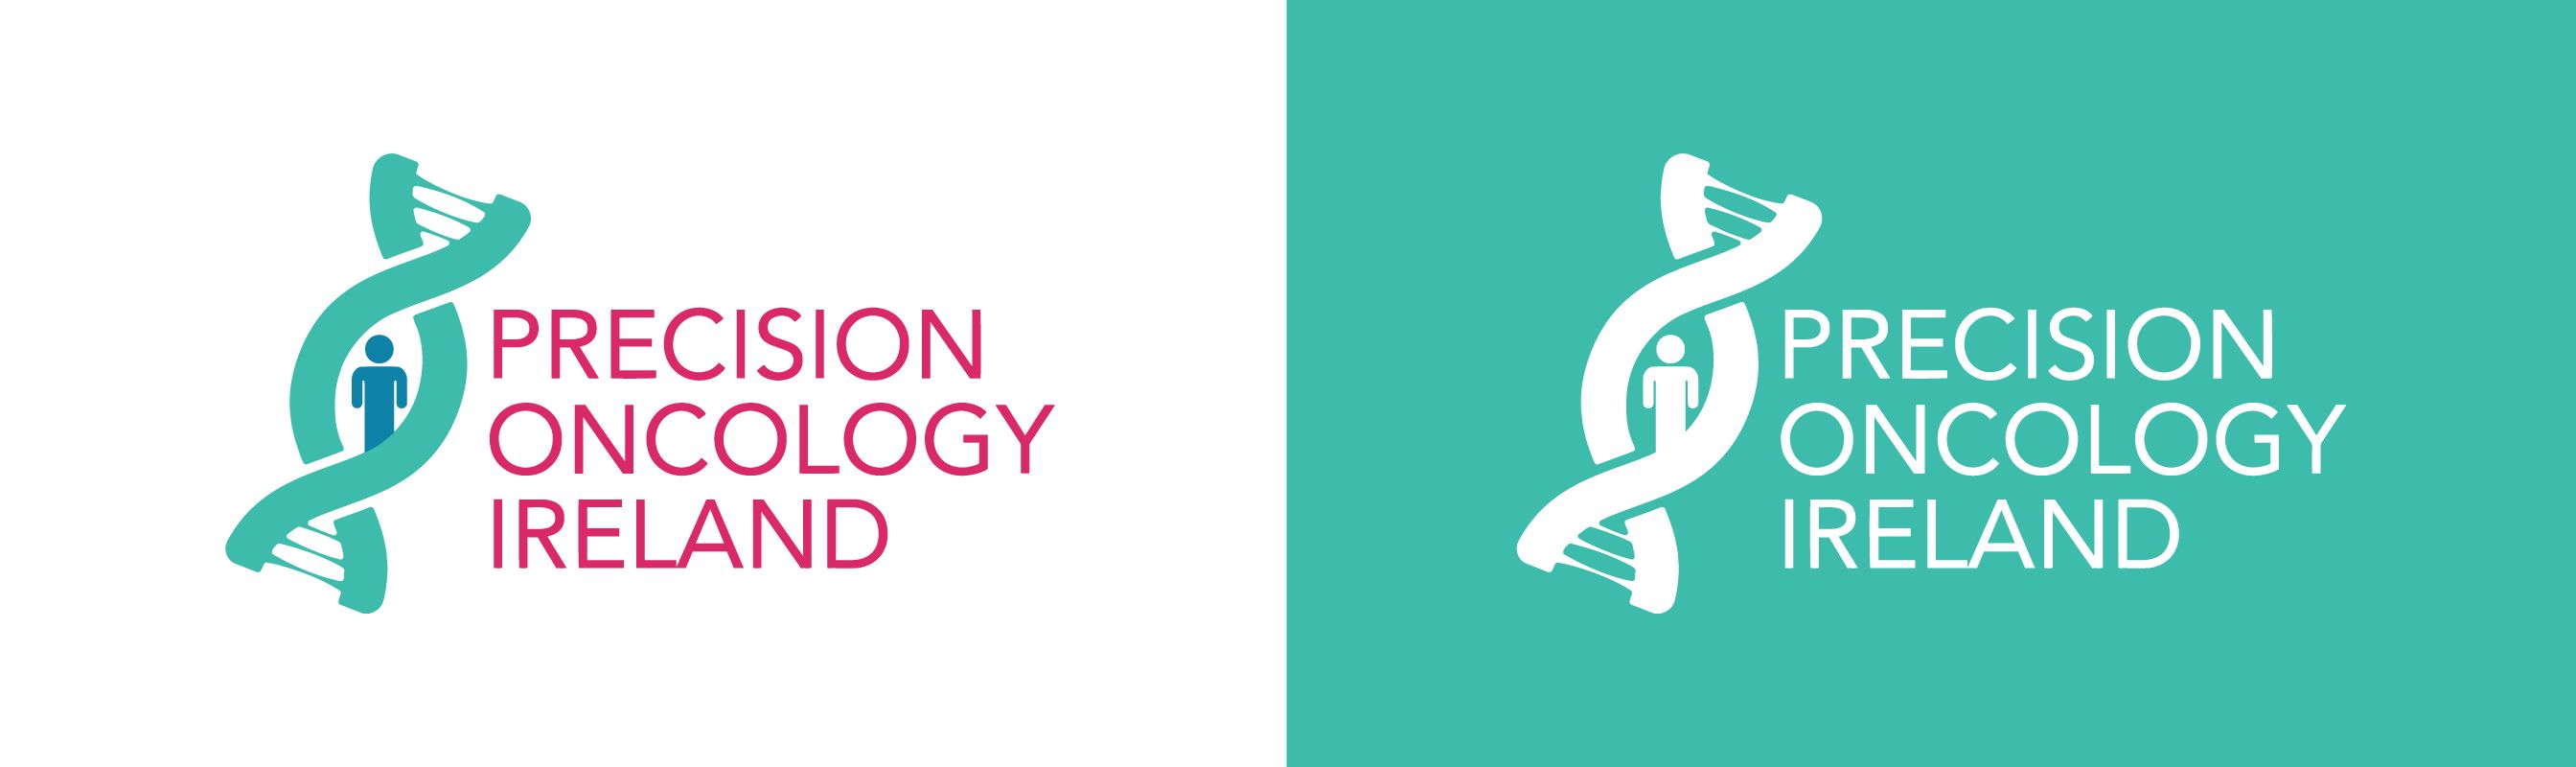 Precision Oncology Ireland logos